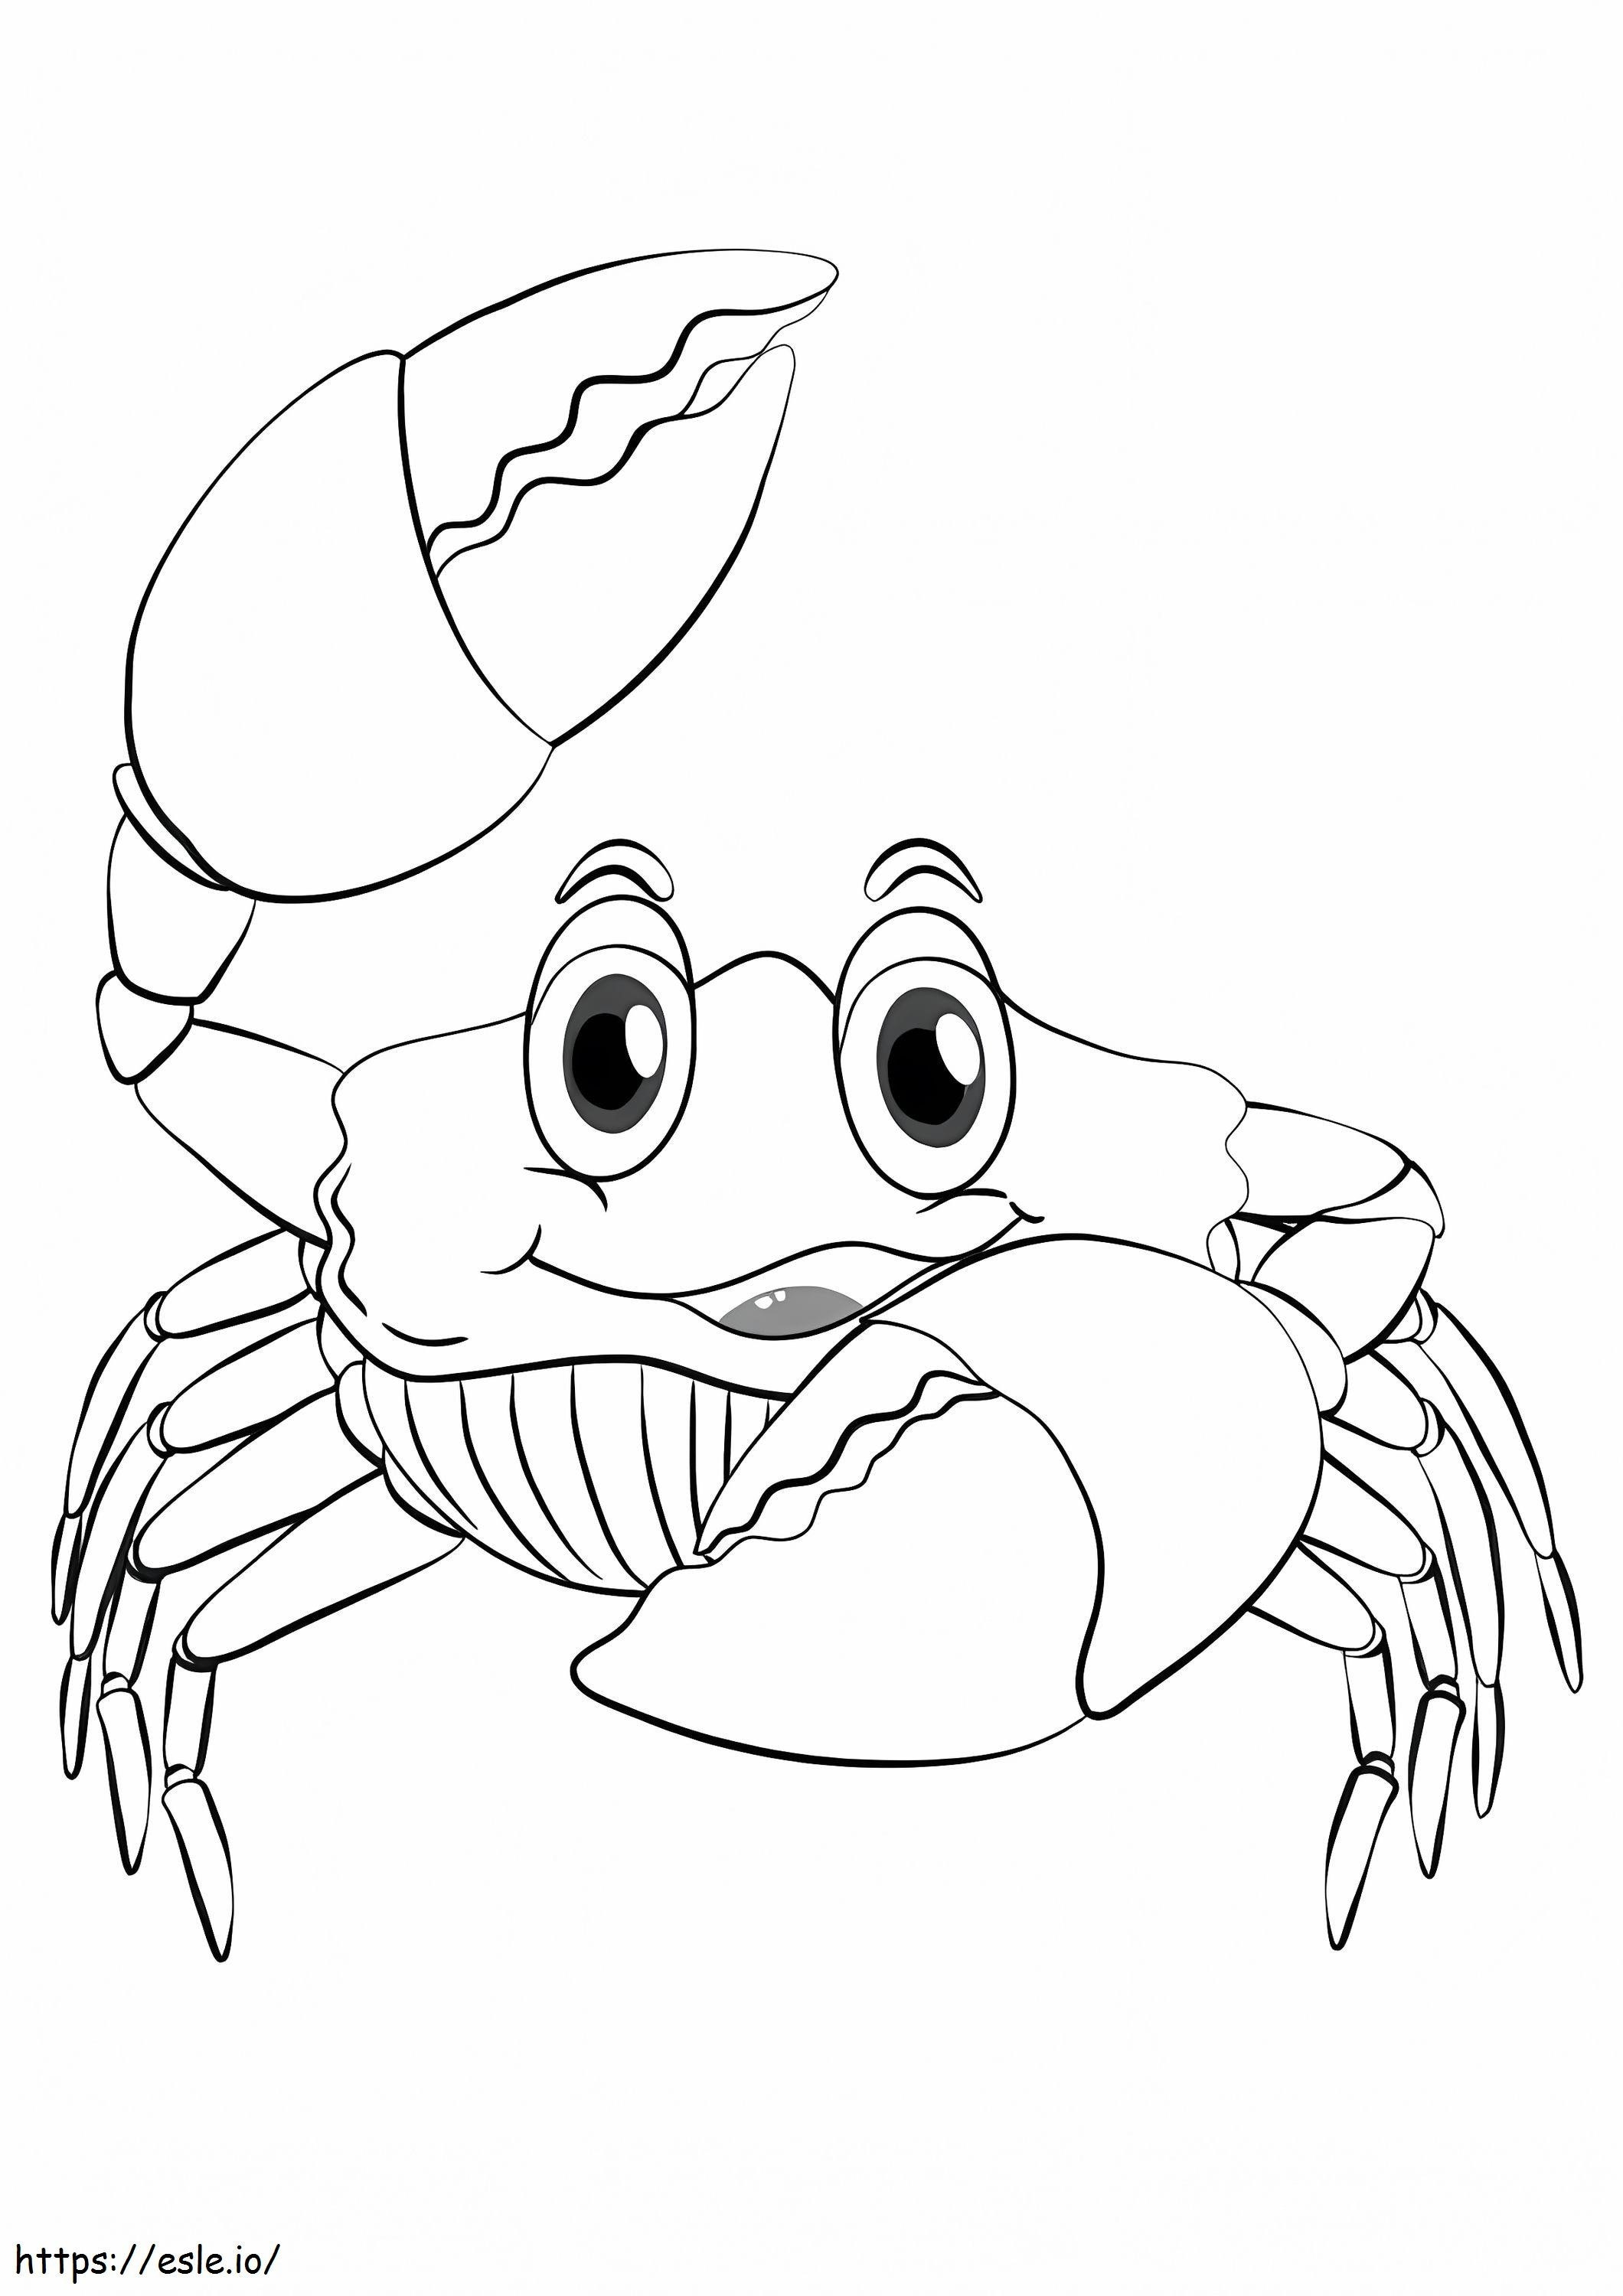 Adorable Crab coloring page